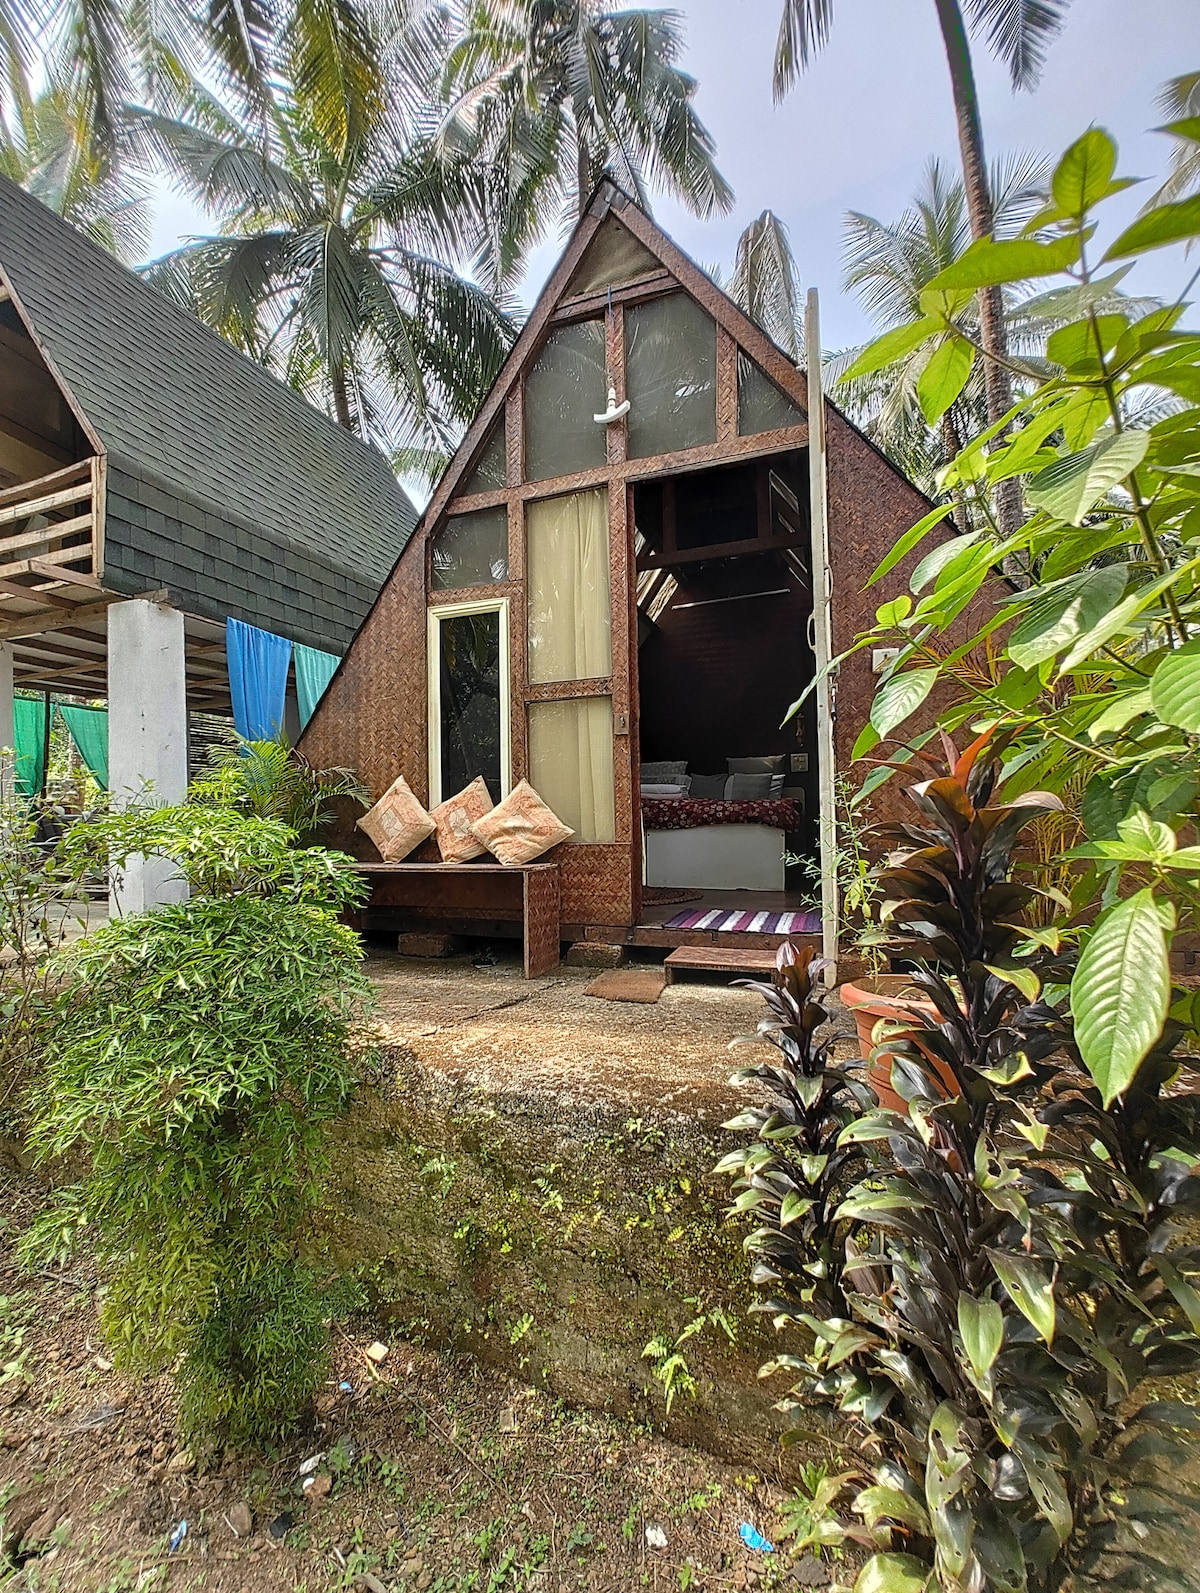 Jungle Hut Trikon, Yogdan Goa, Agonda Beach